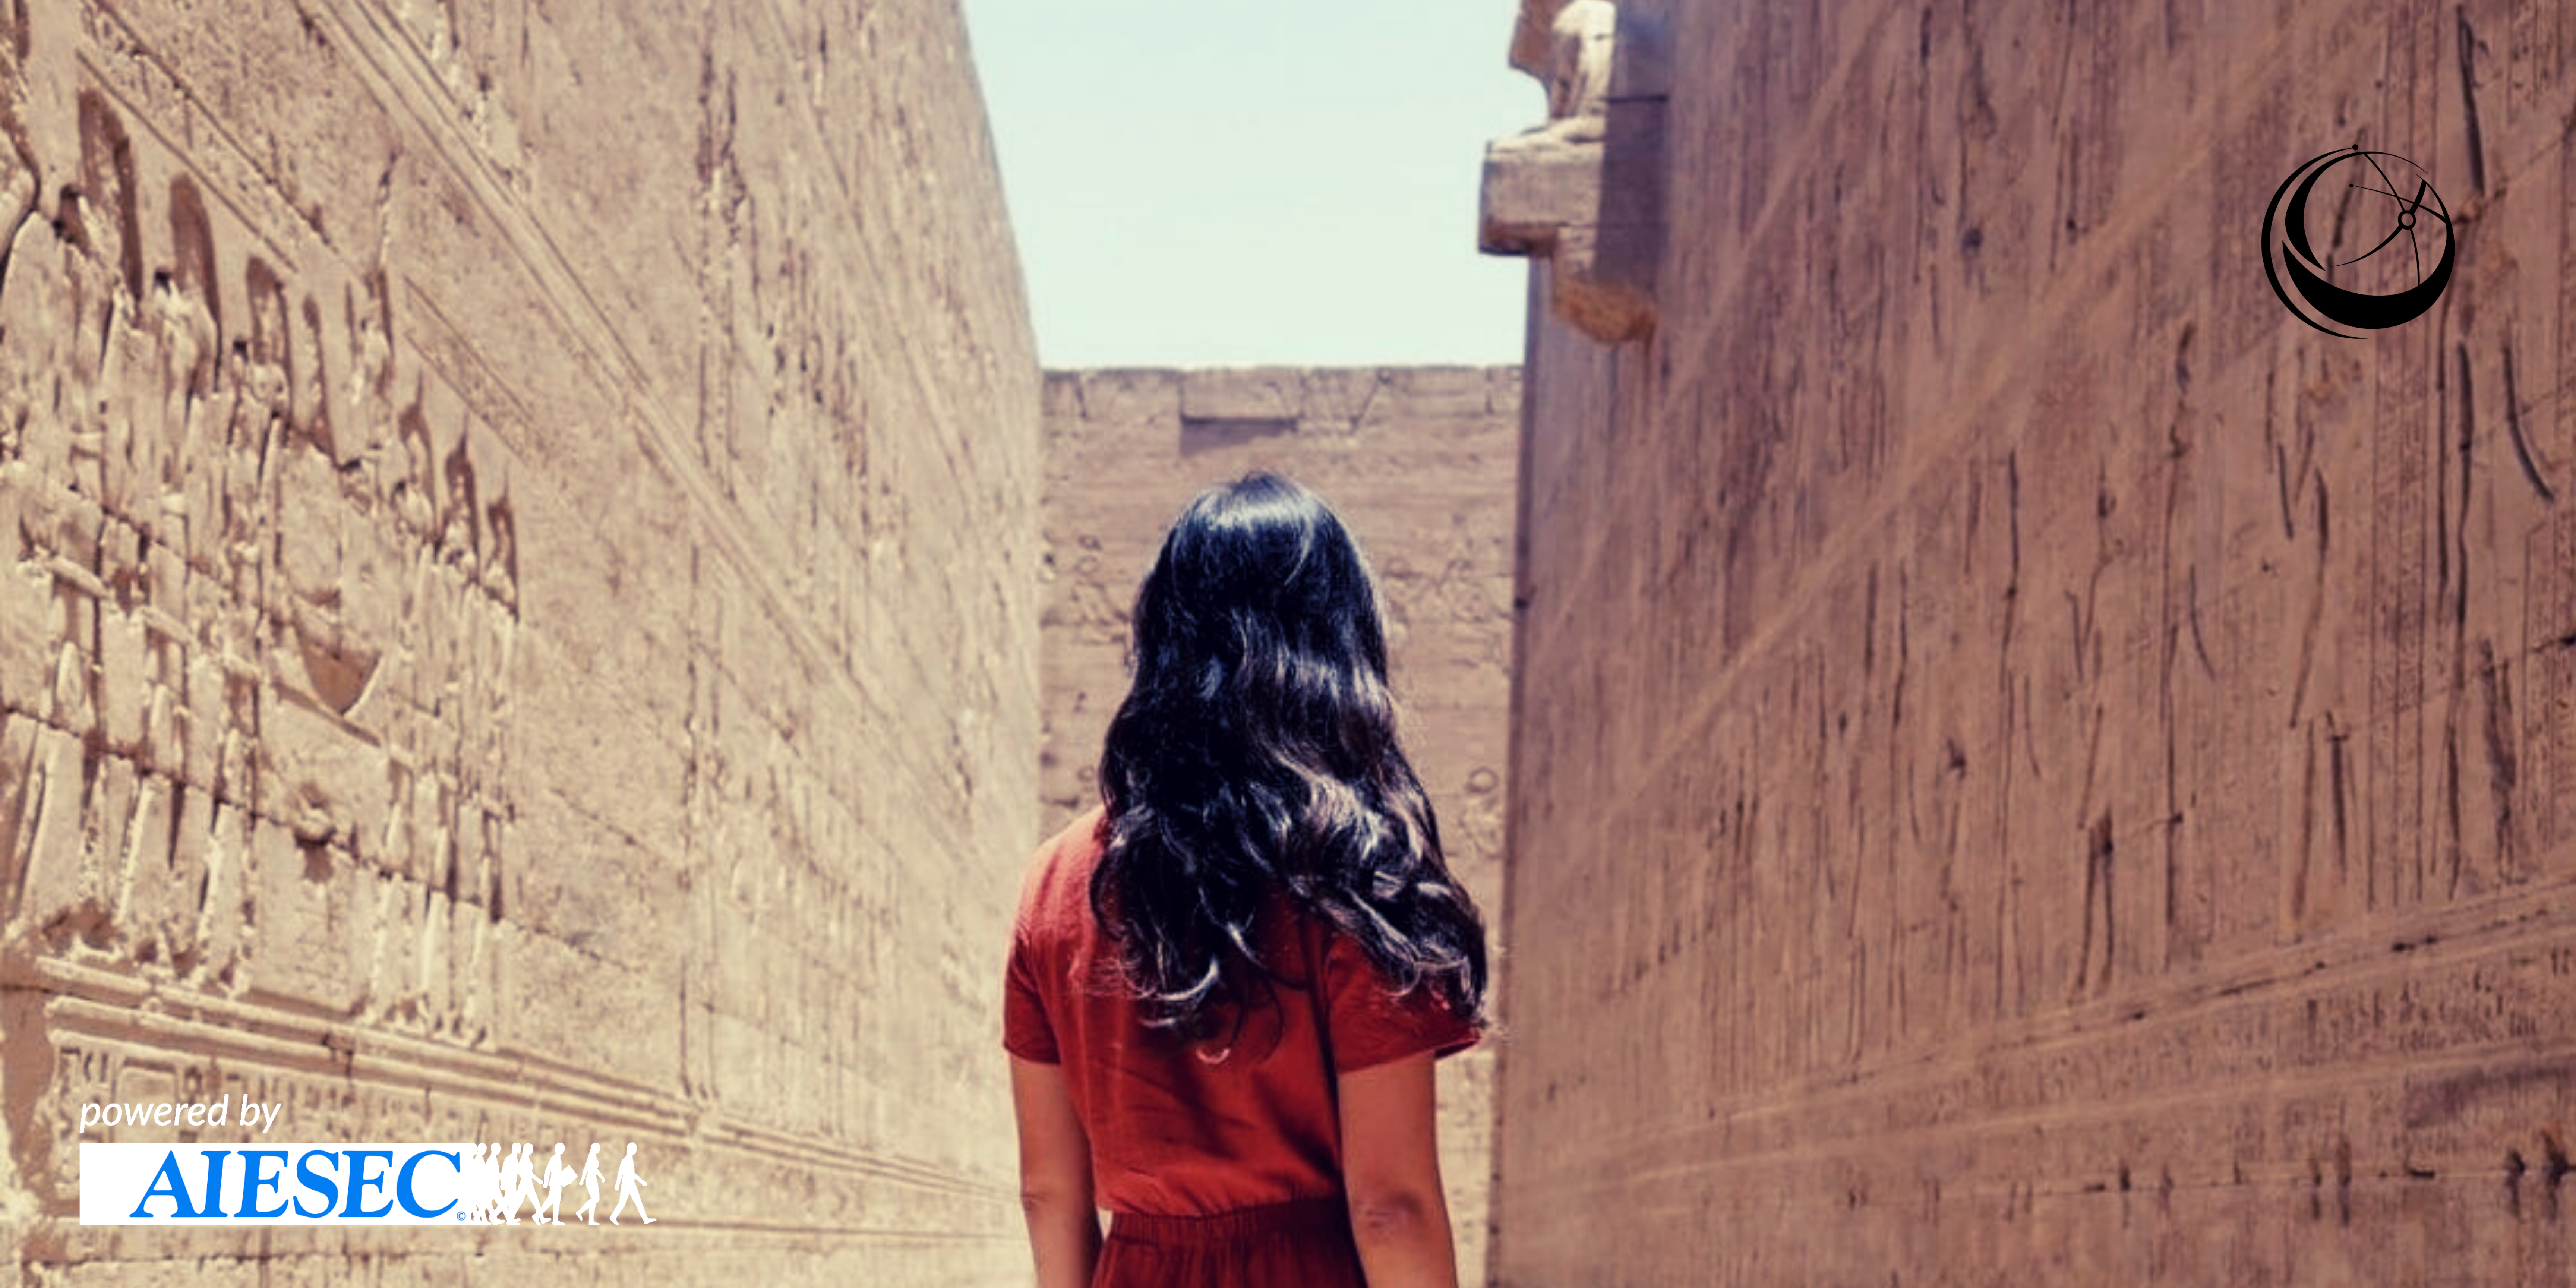 Explore Egypt as an intern!